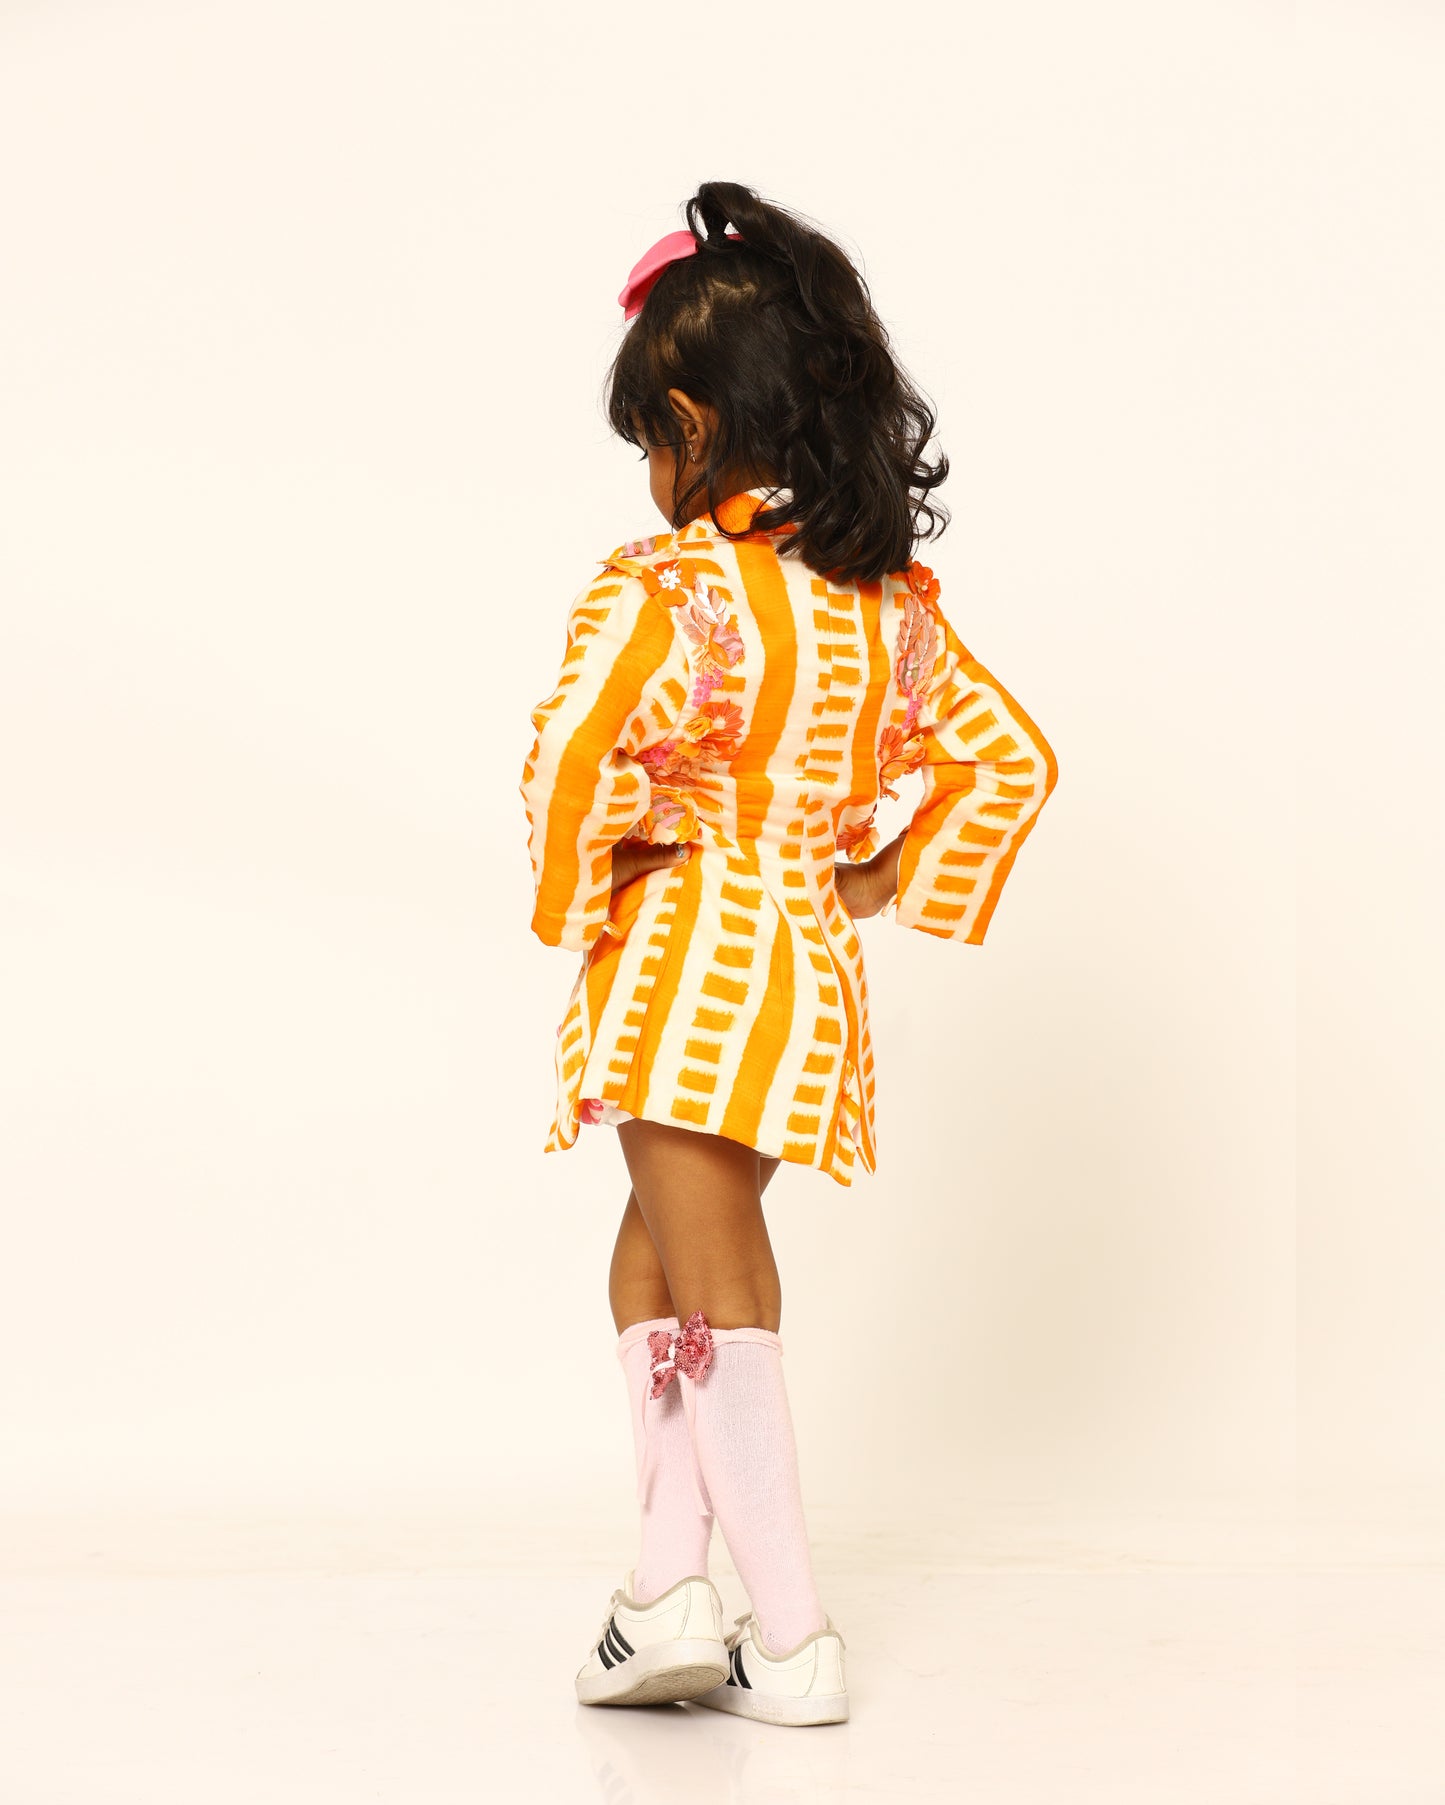 orange + candy + blazer + striped + flowers + pink + striped + skort + bow + socks + shoe + party + cheerful + jump + back